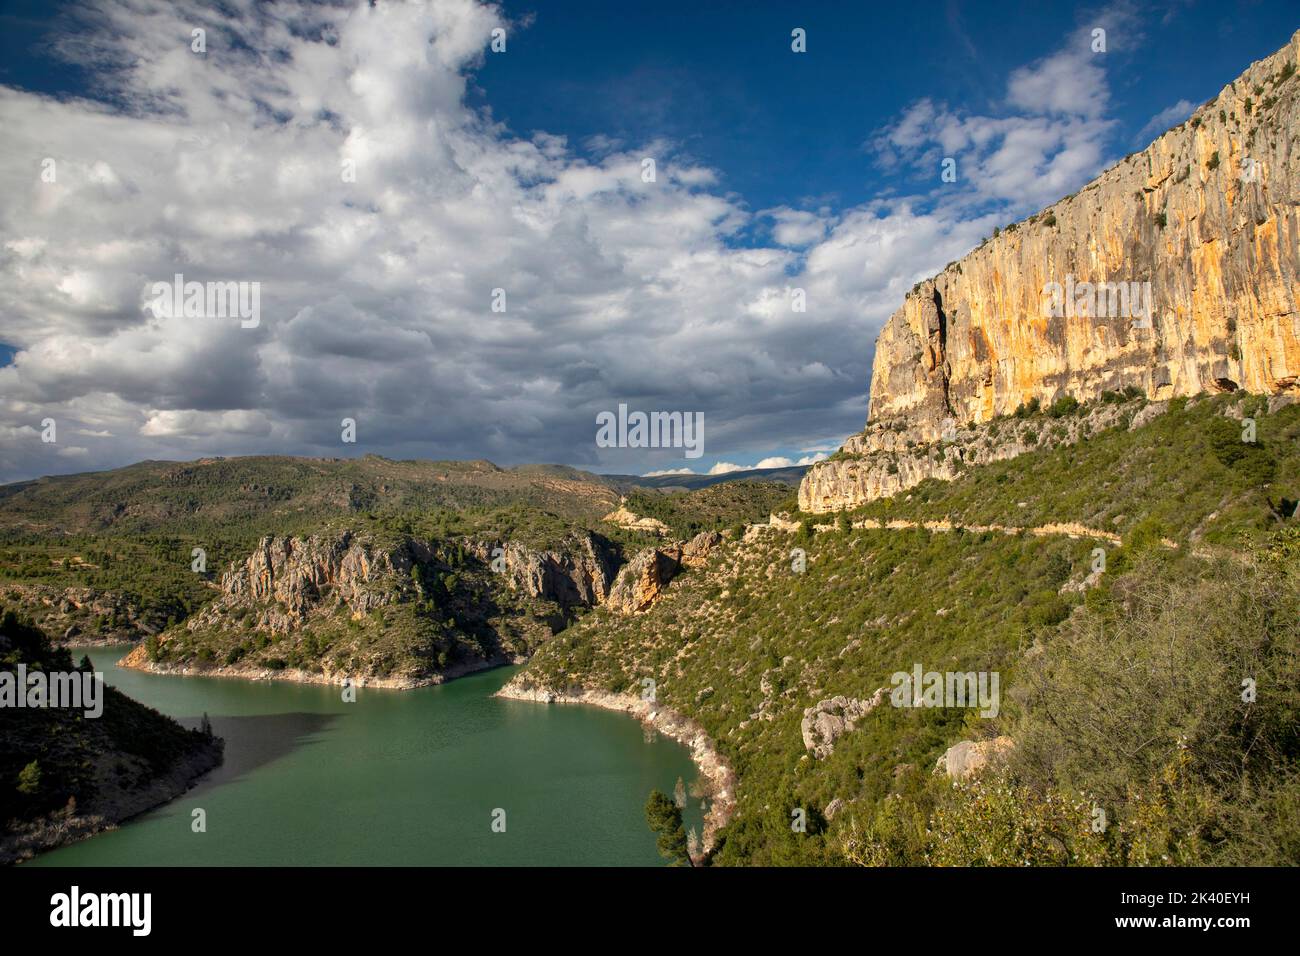 Lac de stockage di Loriguilla, branche de la rivière Turia avec des faces abruptes, Espagne, Losa del Obispo Banque D'Images